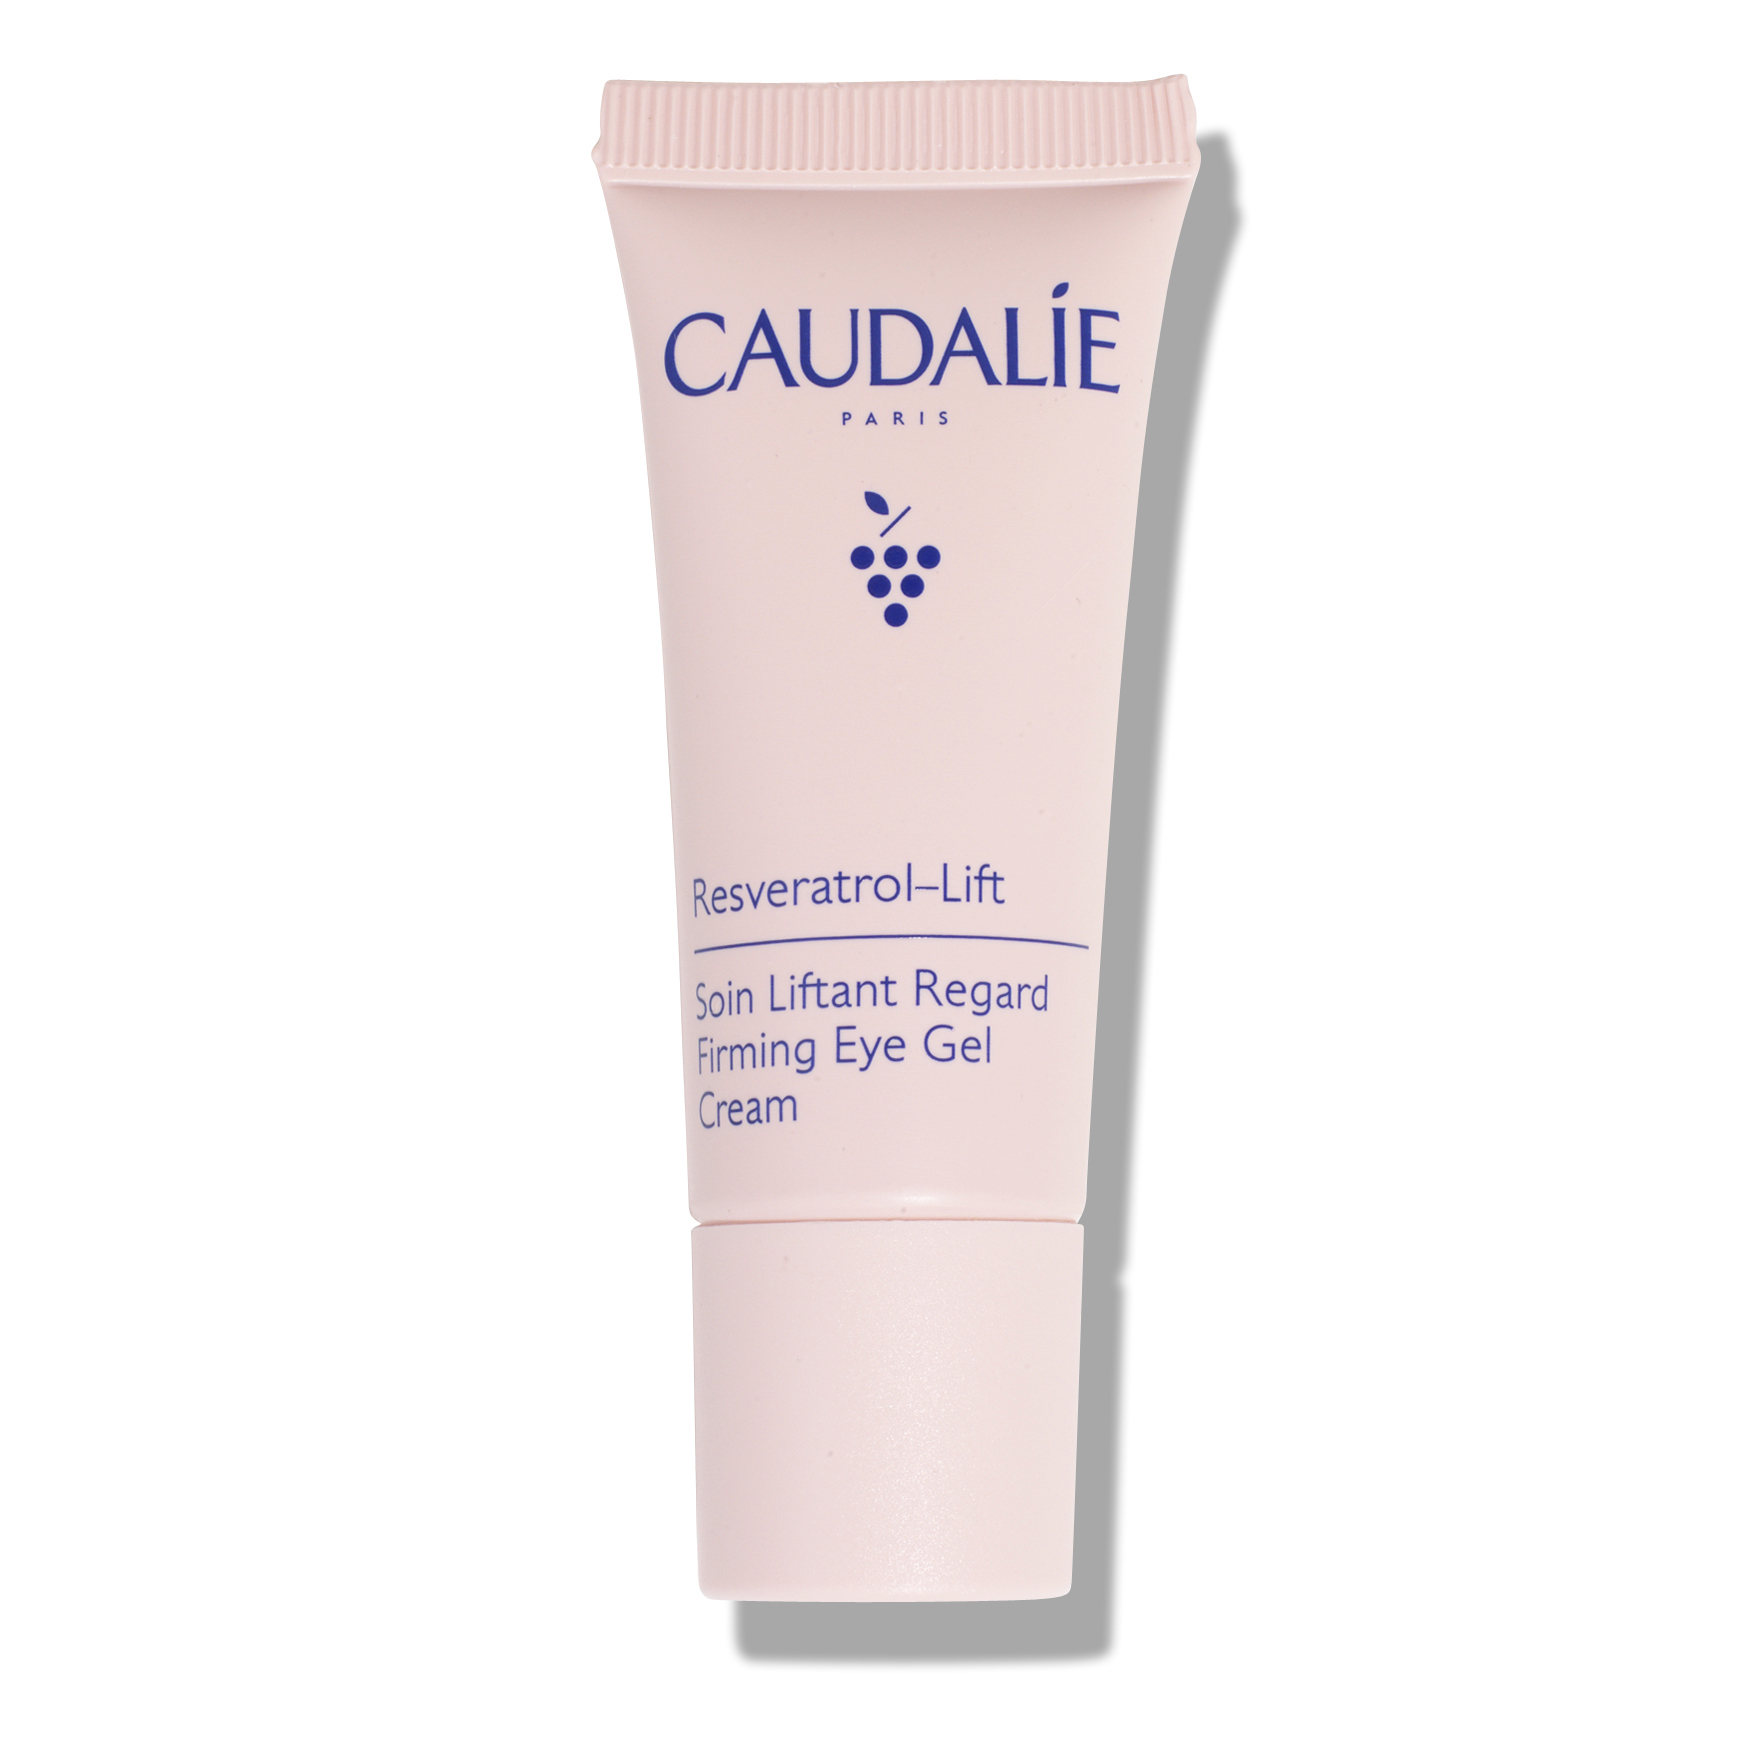 Caudalie Resveratrol-Lift Eye Gel Cream